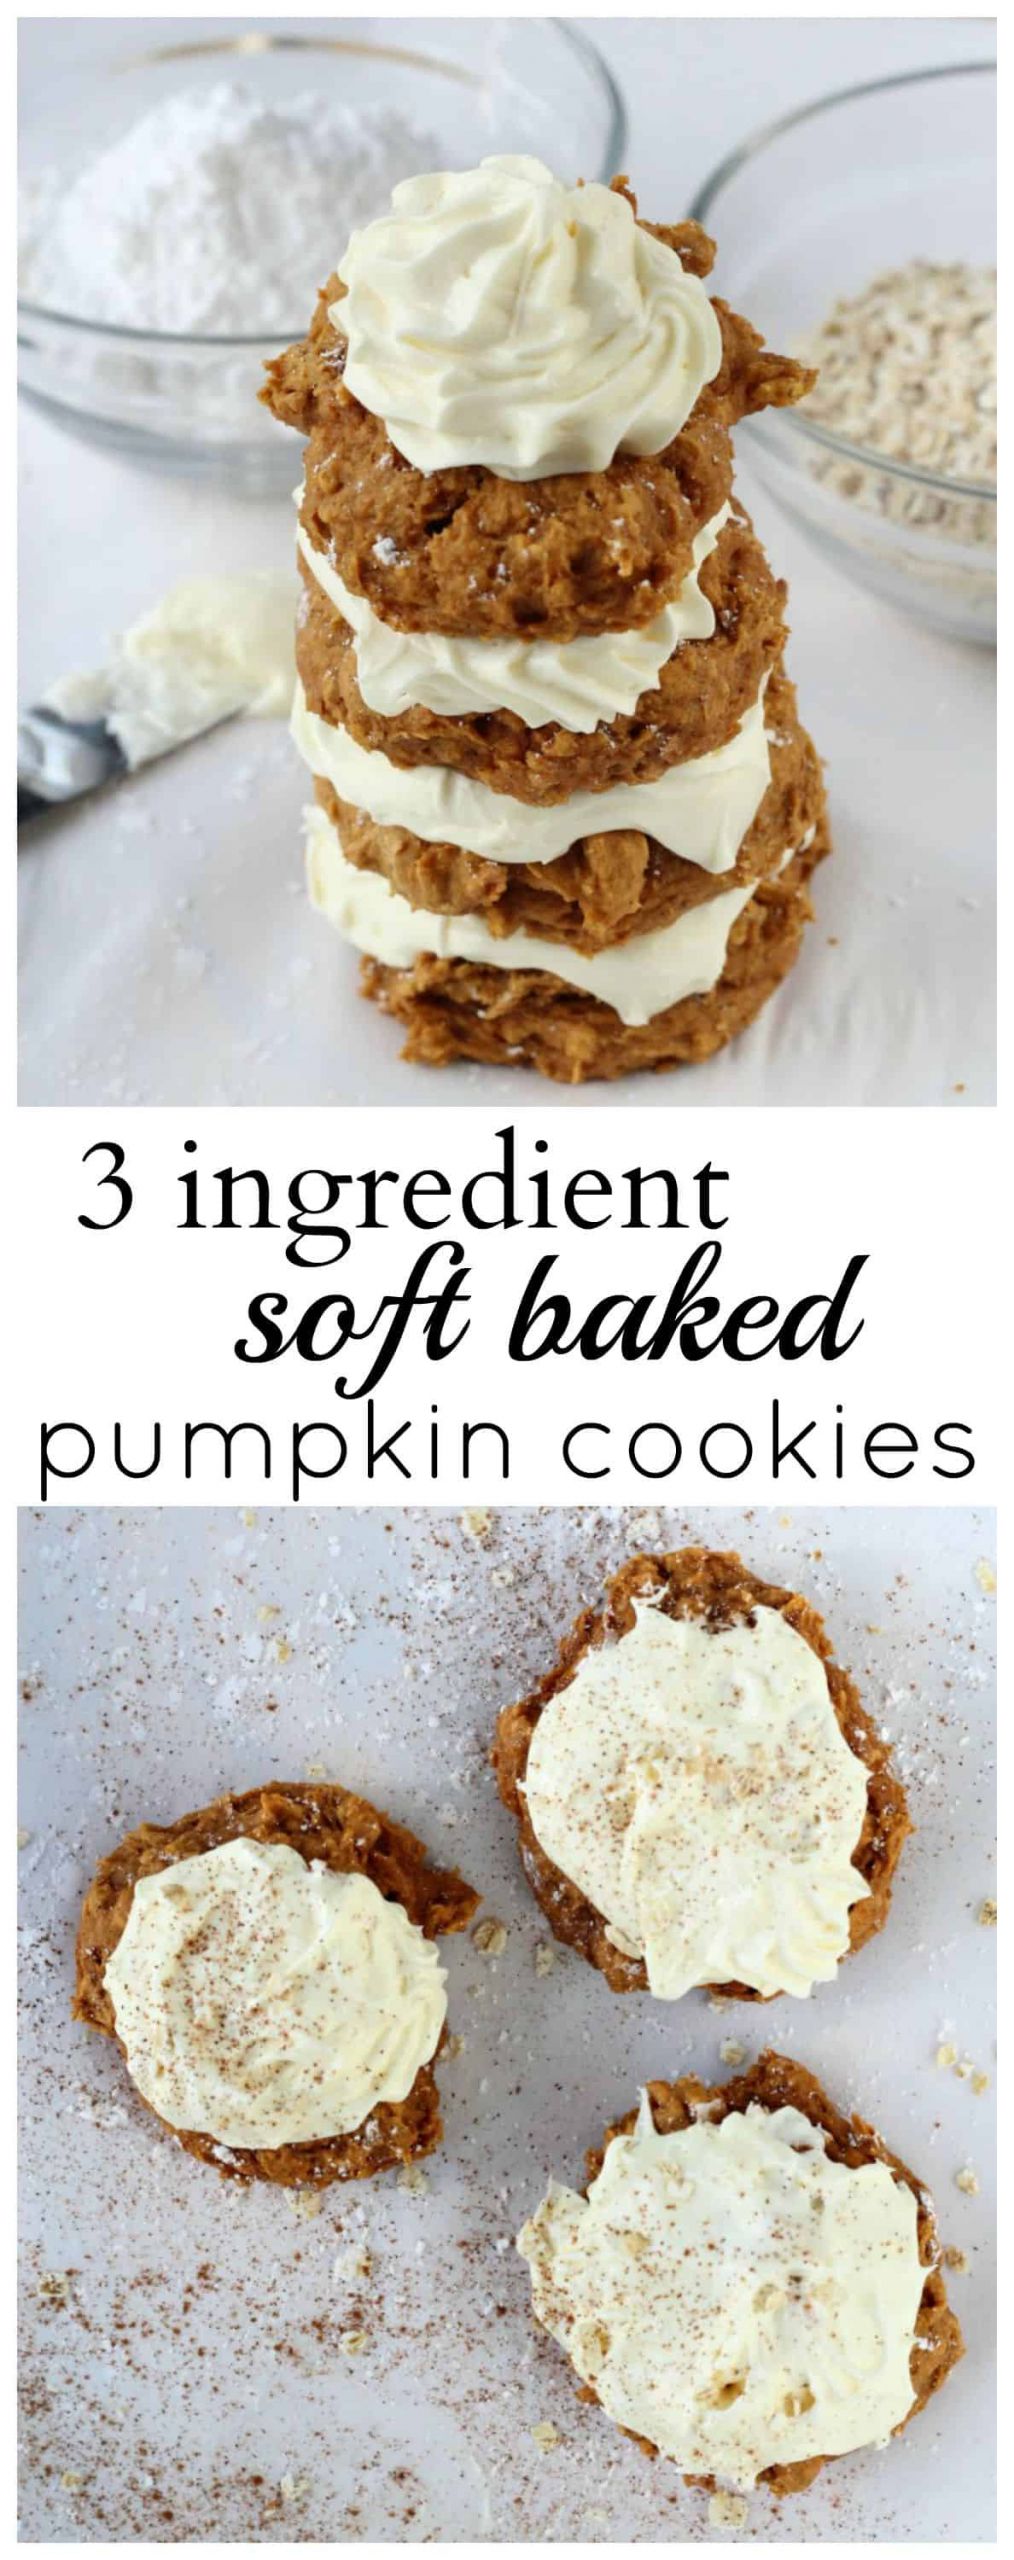 2 Ingredient Pumpkin Cookies
 3 Ingre nt Soft Pumpkin Cookies